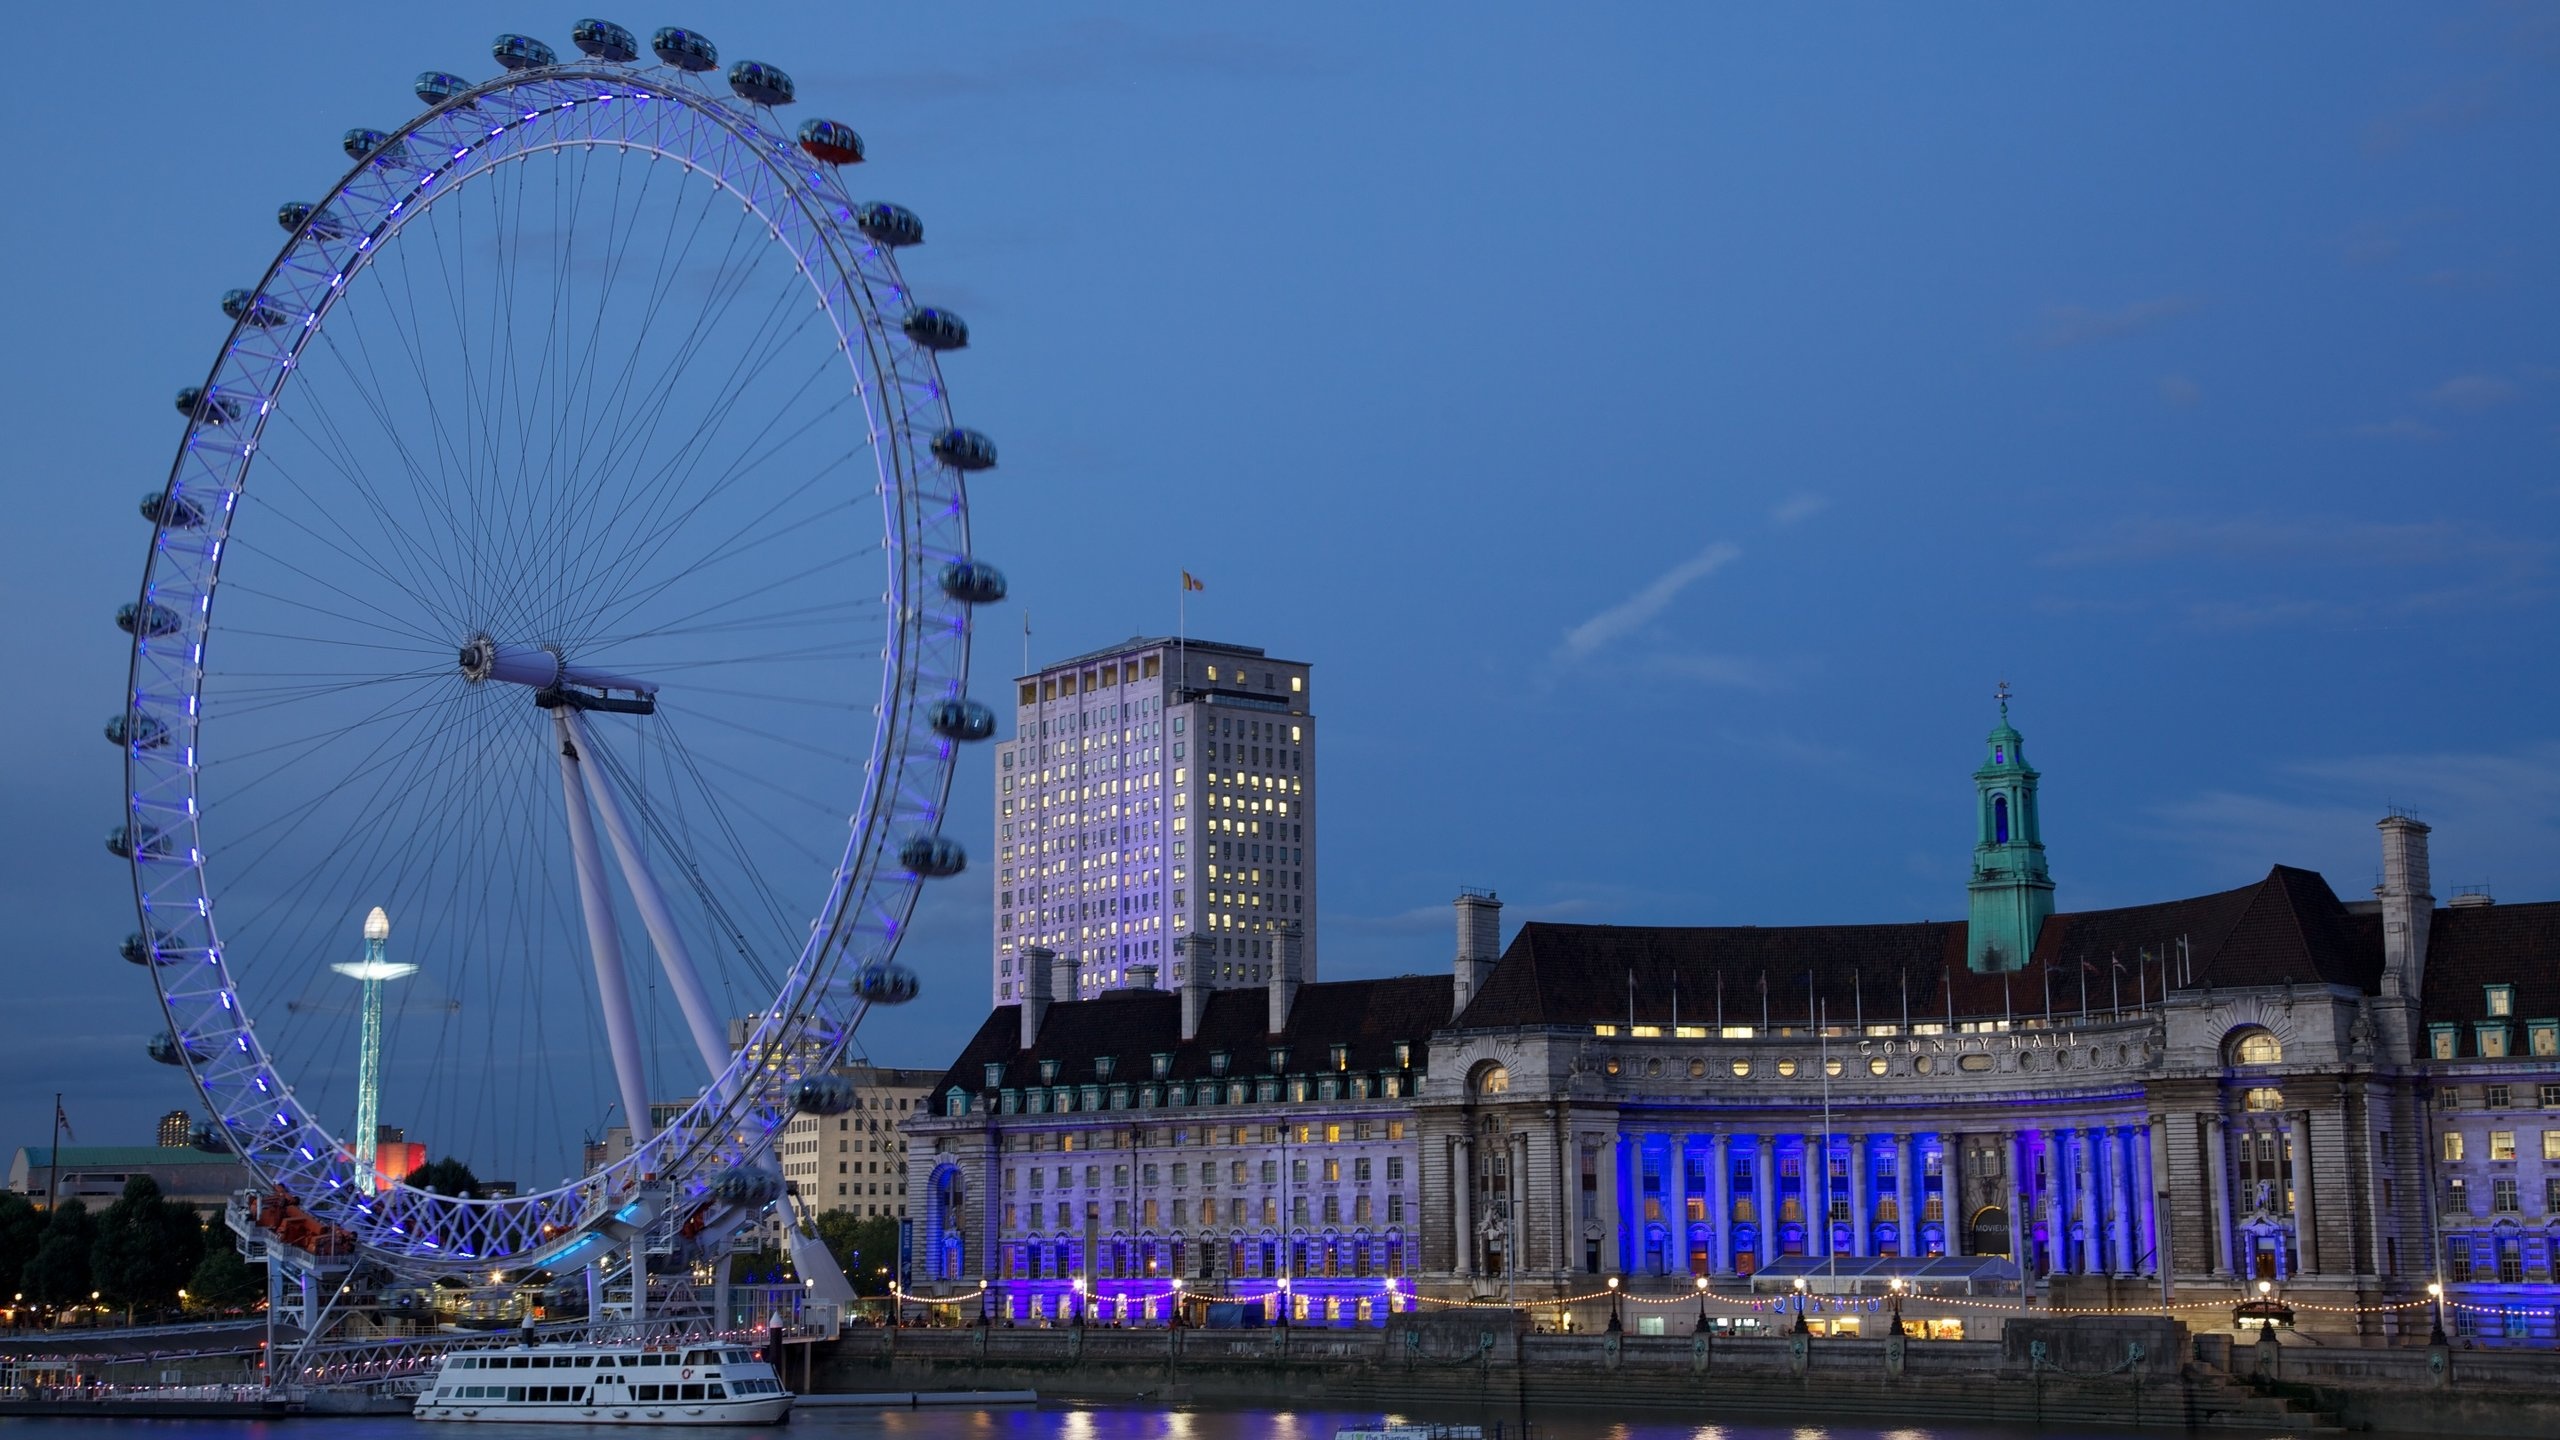 London Eye, Holiday apartment, London accommodation, Travel experience, 2560x1440 HD Desktop